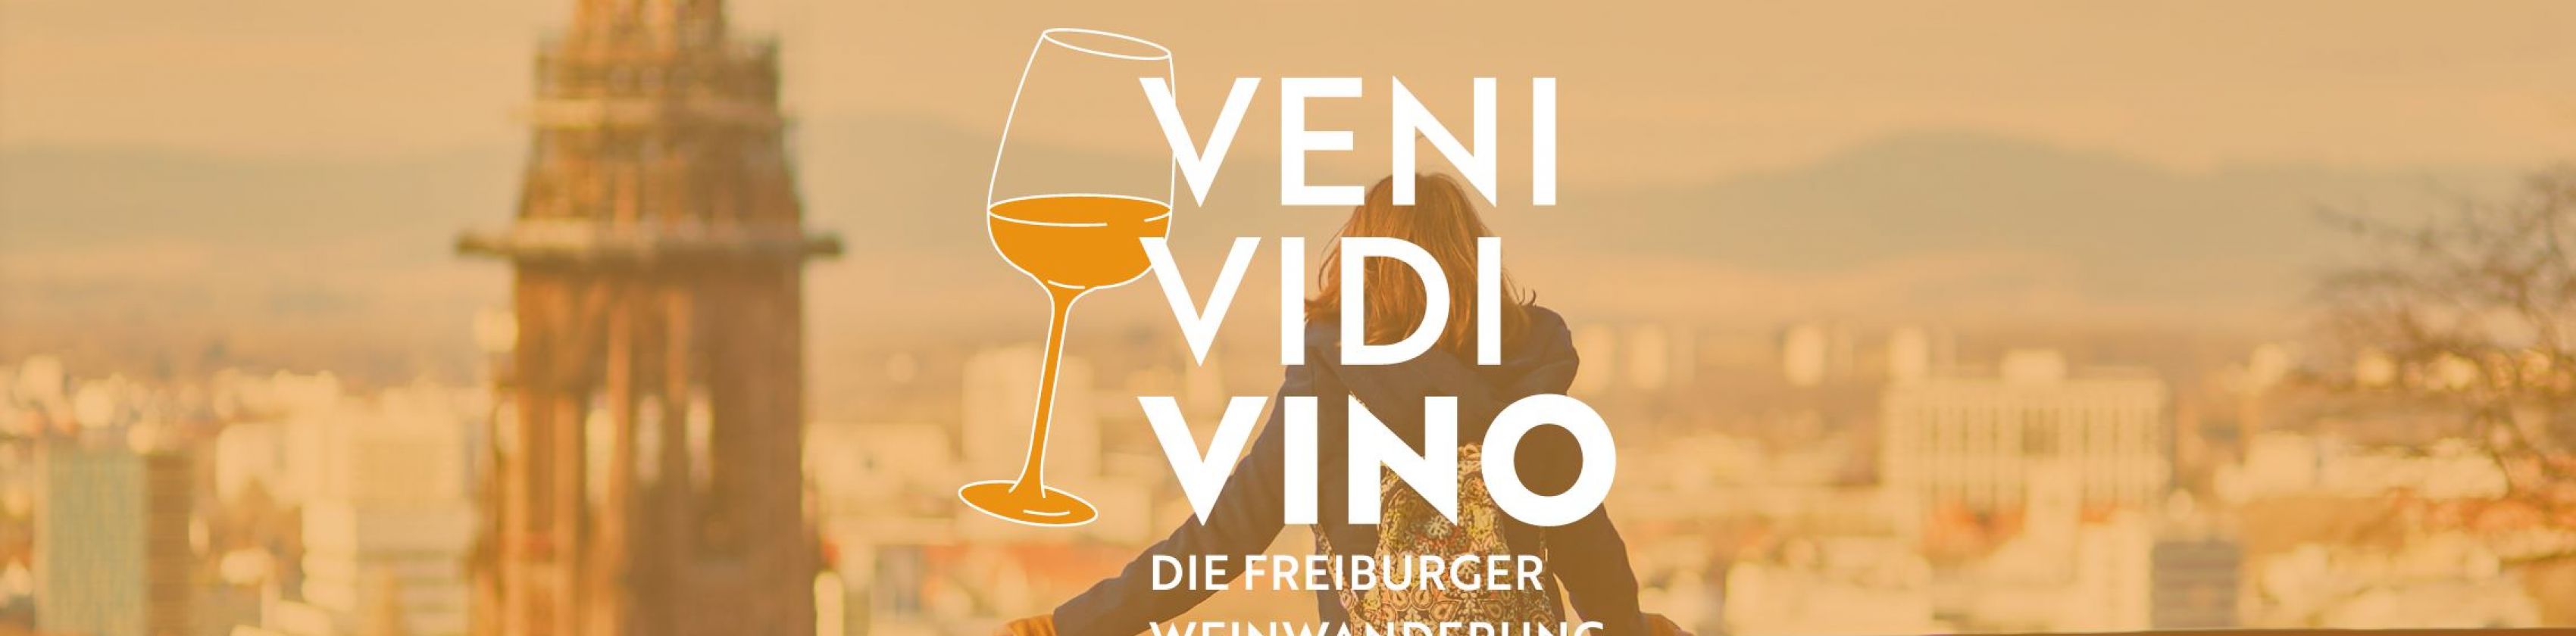 Veni, vidi, vino - la randonnée viticole fribourgeoise ! - La randonnée viticole sur le Schlossberg de Fribourg avec les Wine Guides